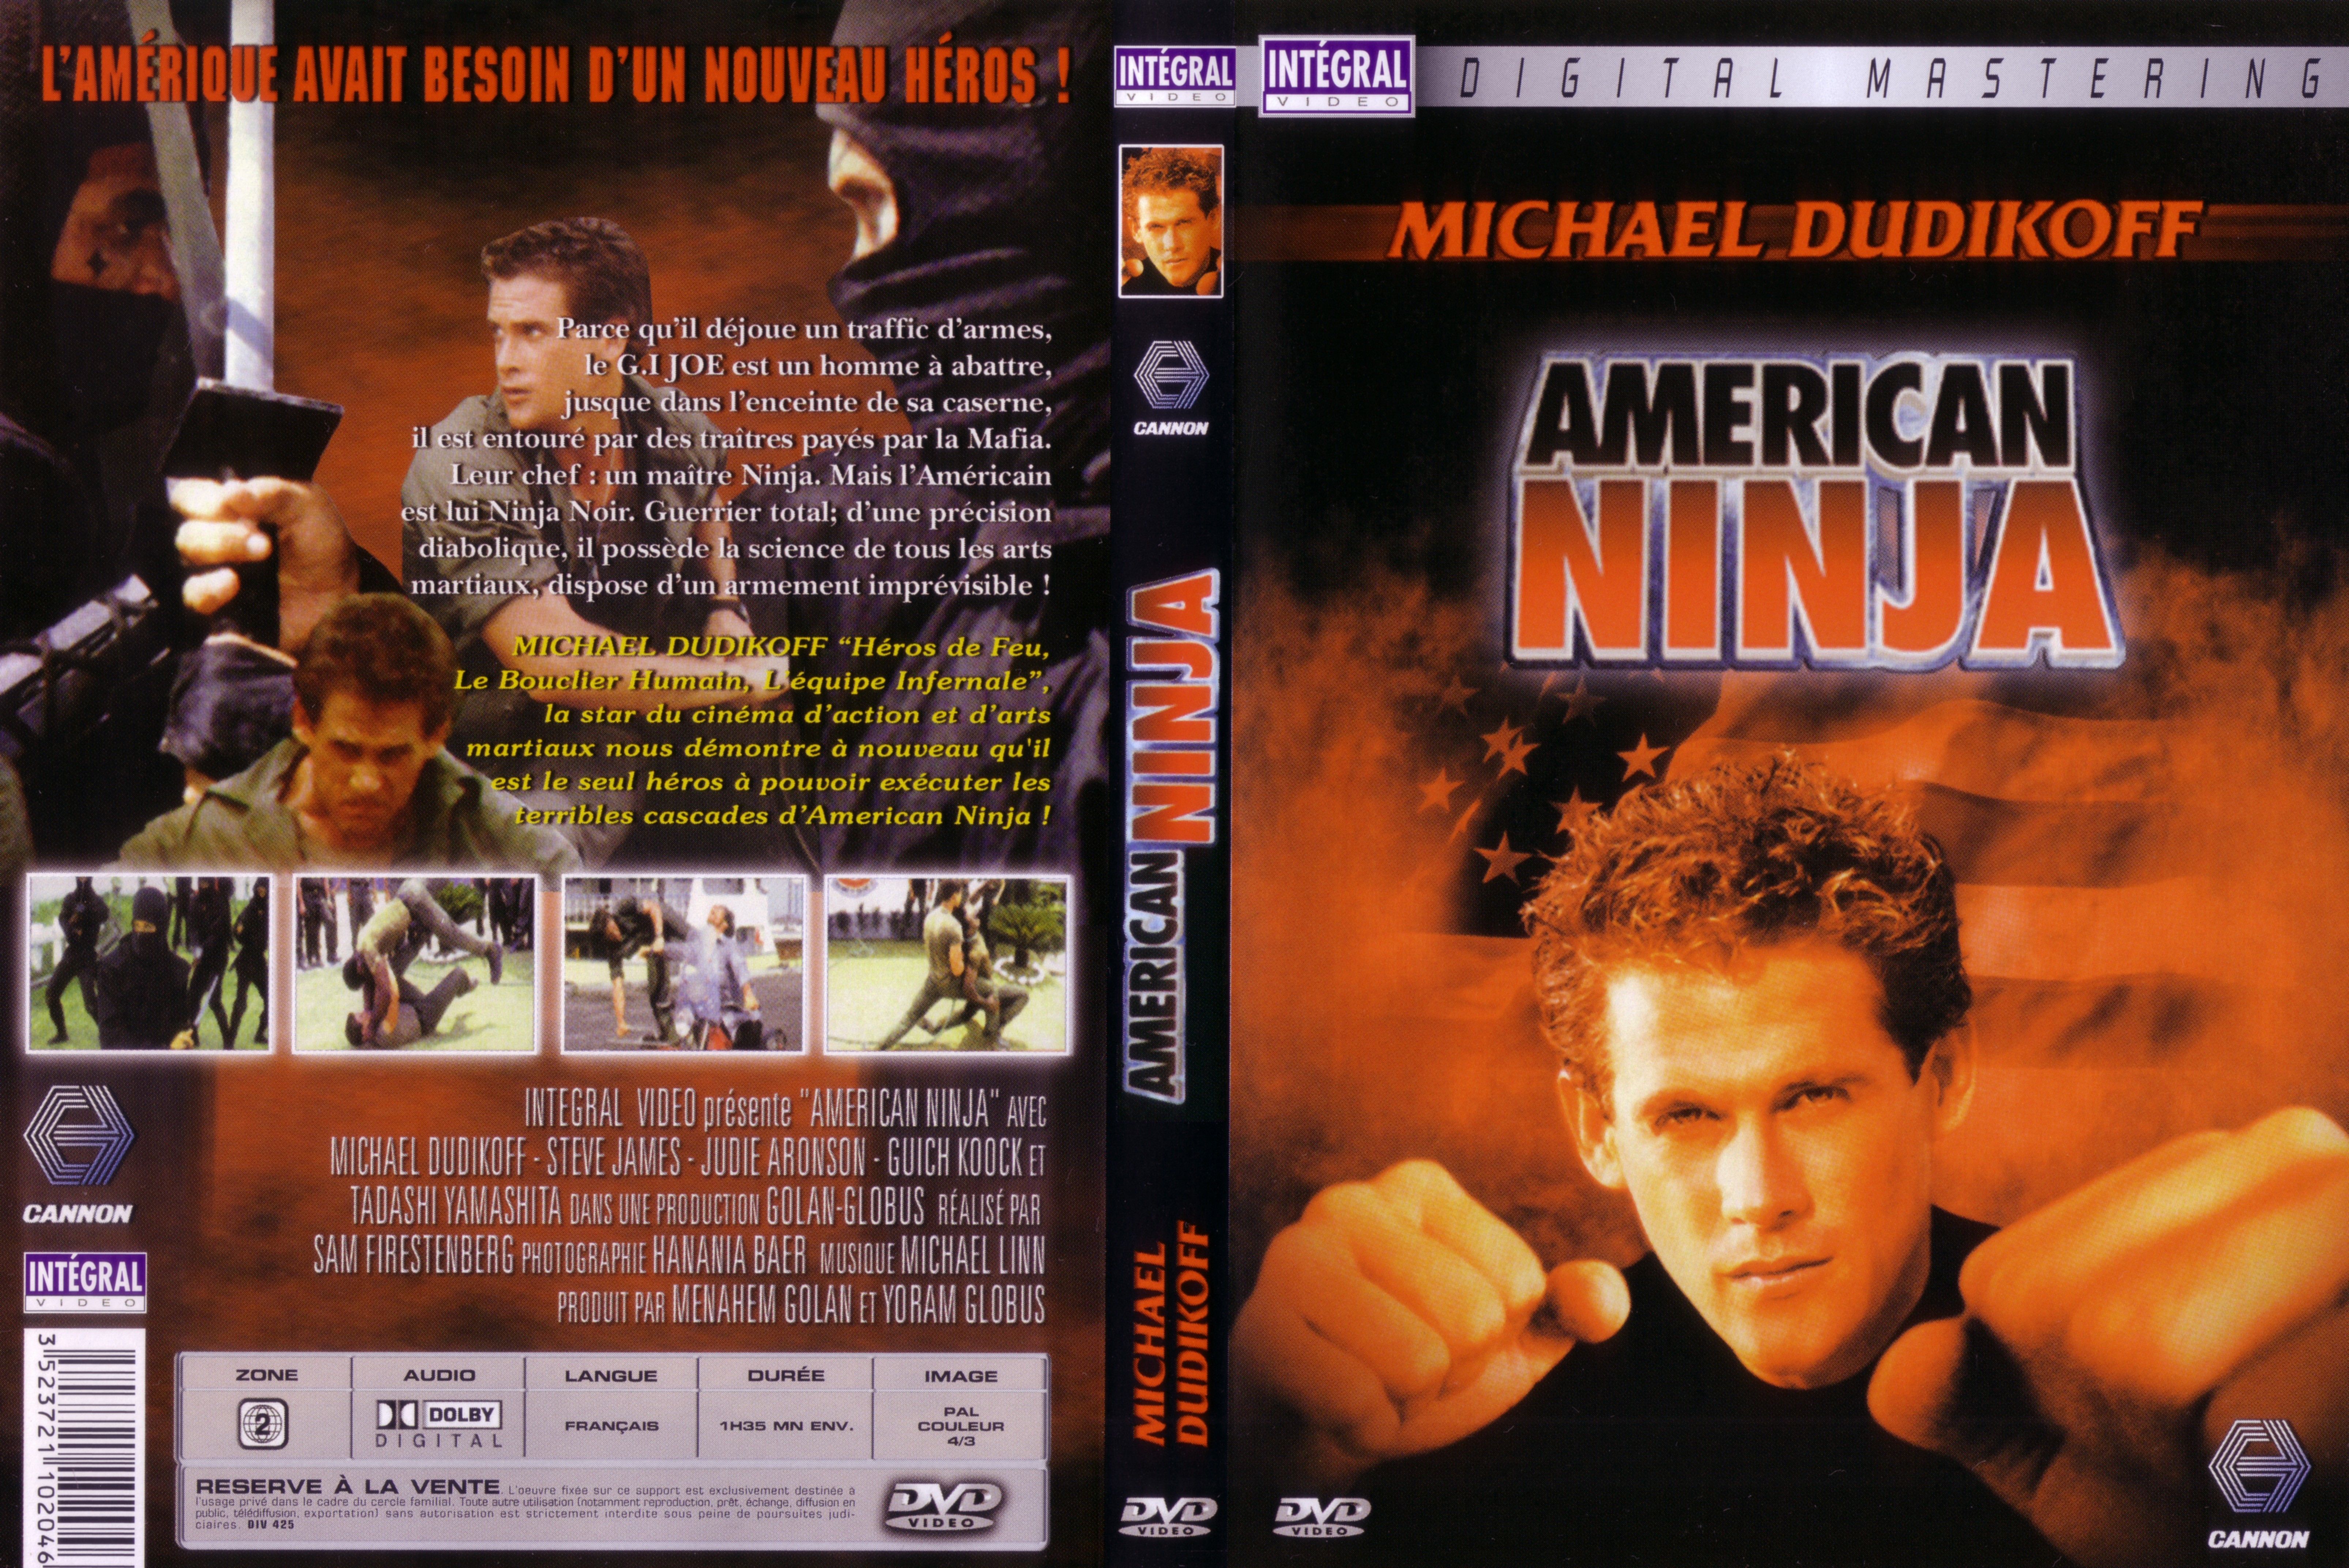 Jaquette DVD American ninja